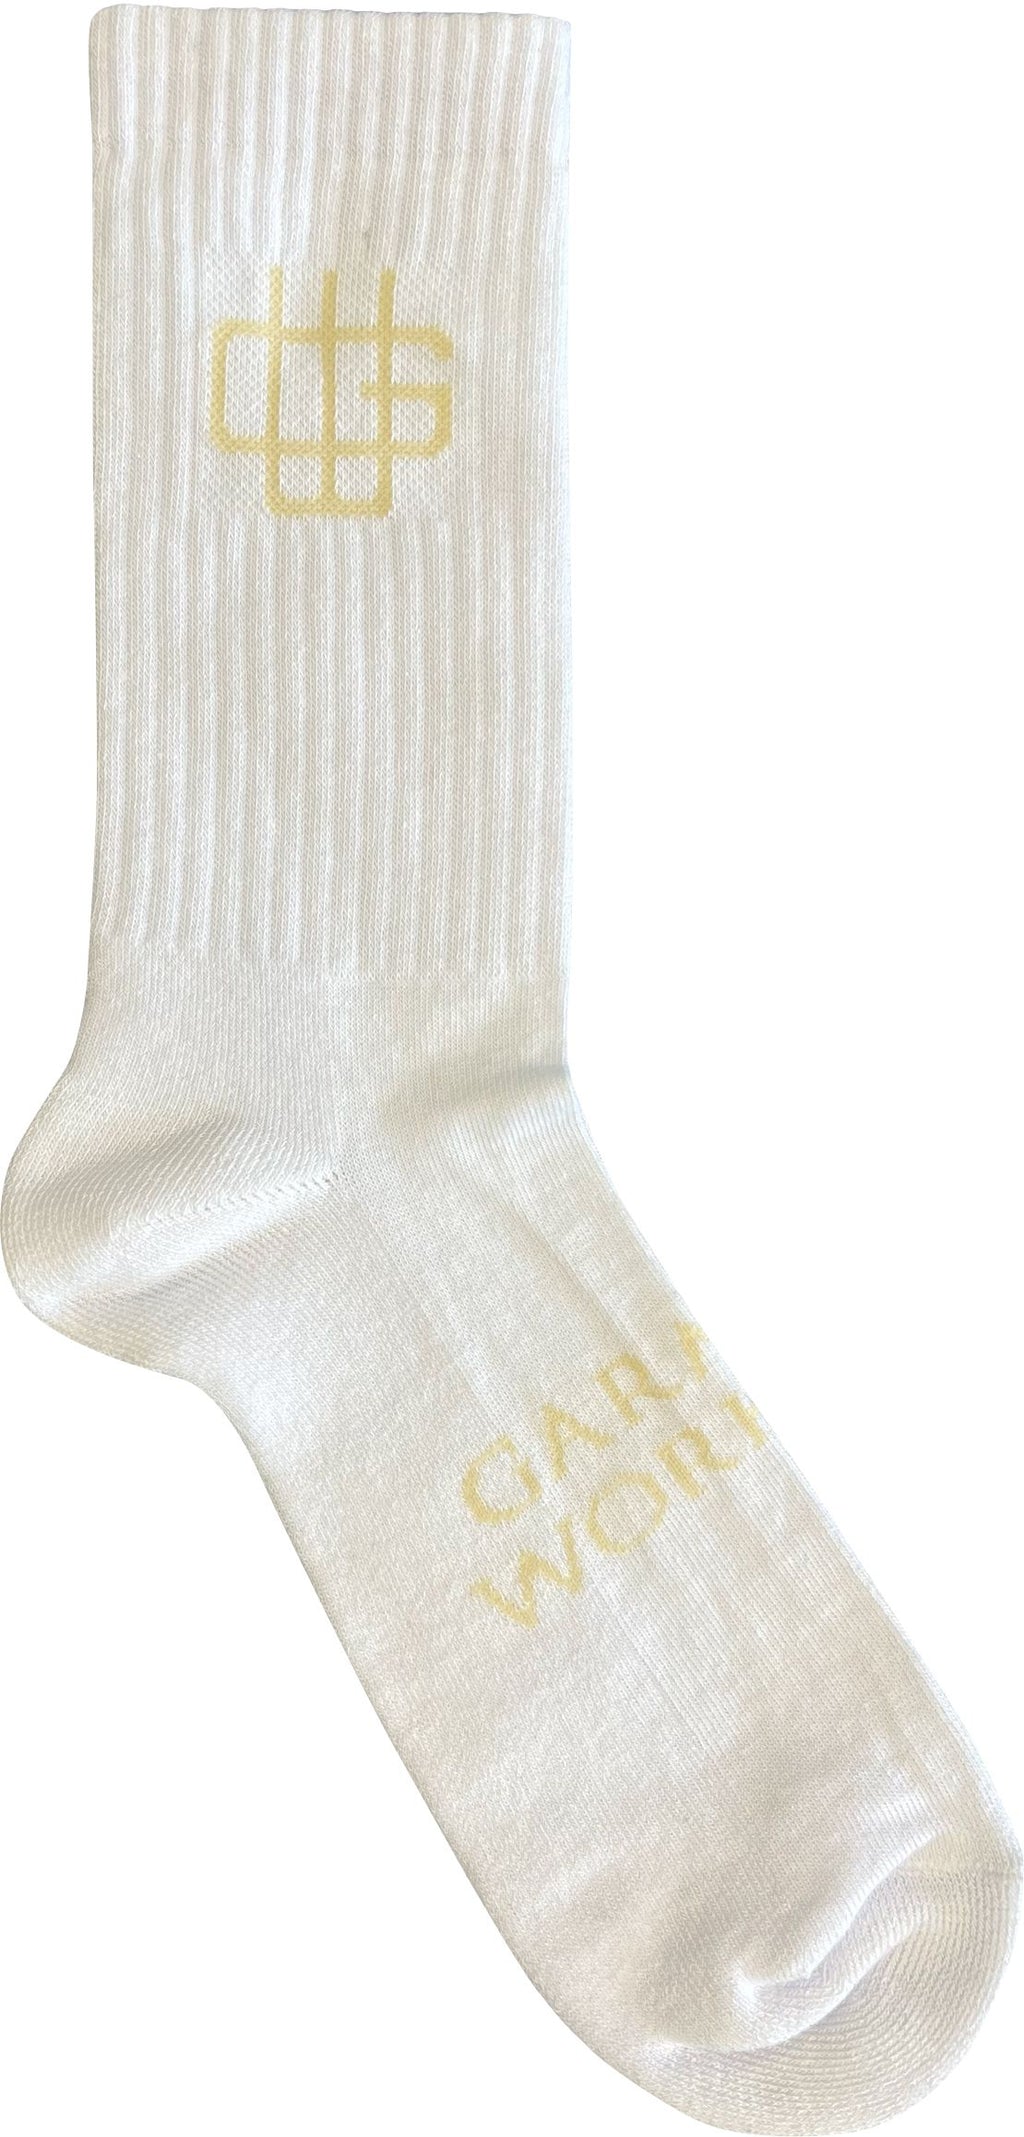  Garment Workshop Calze Socks Unisex White Bianco Uomo - 1